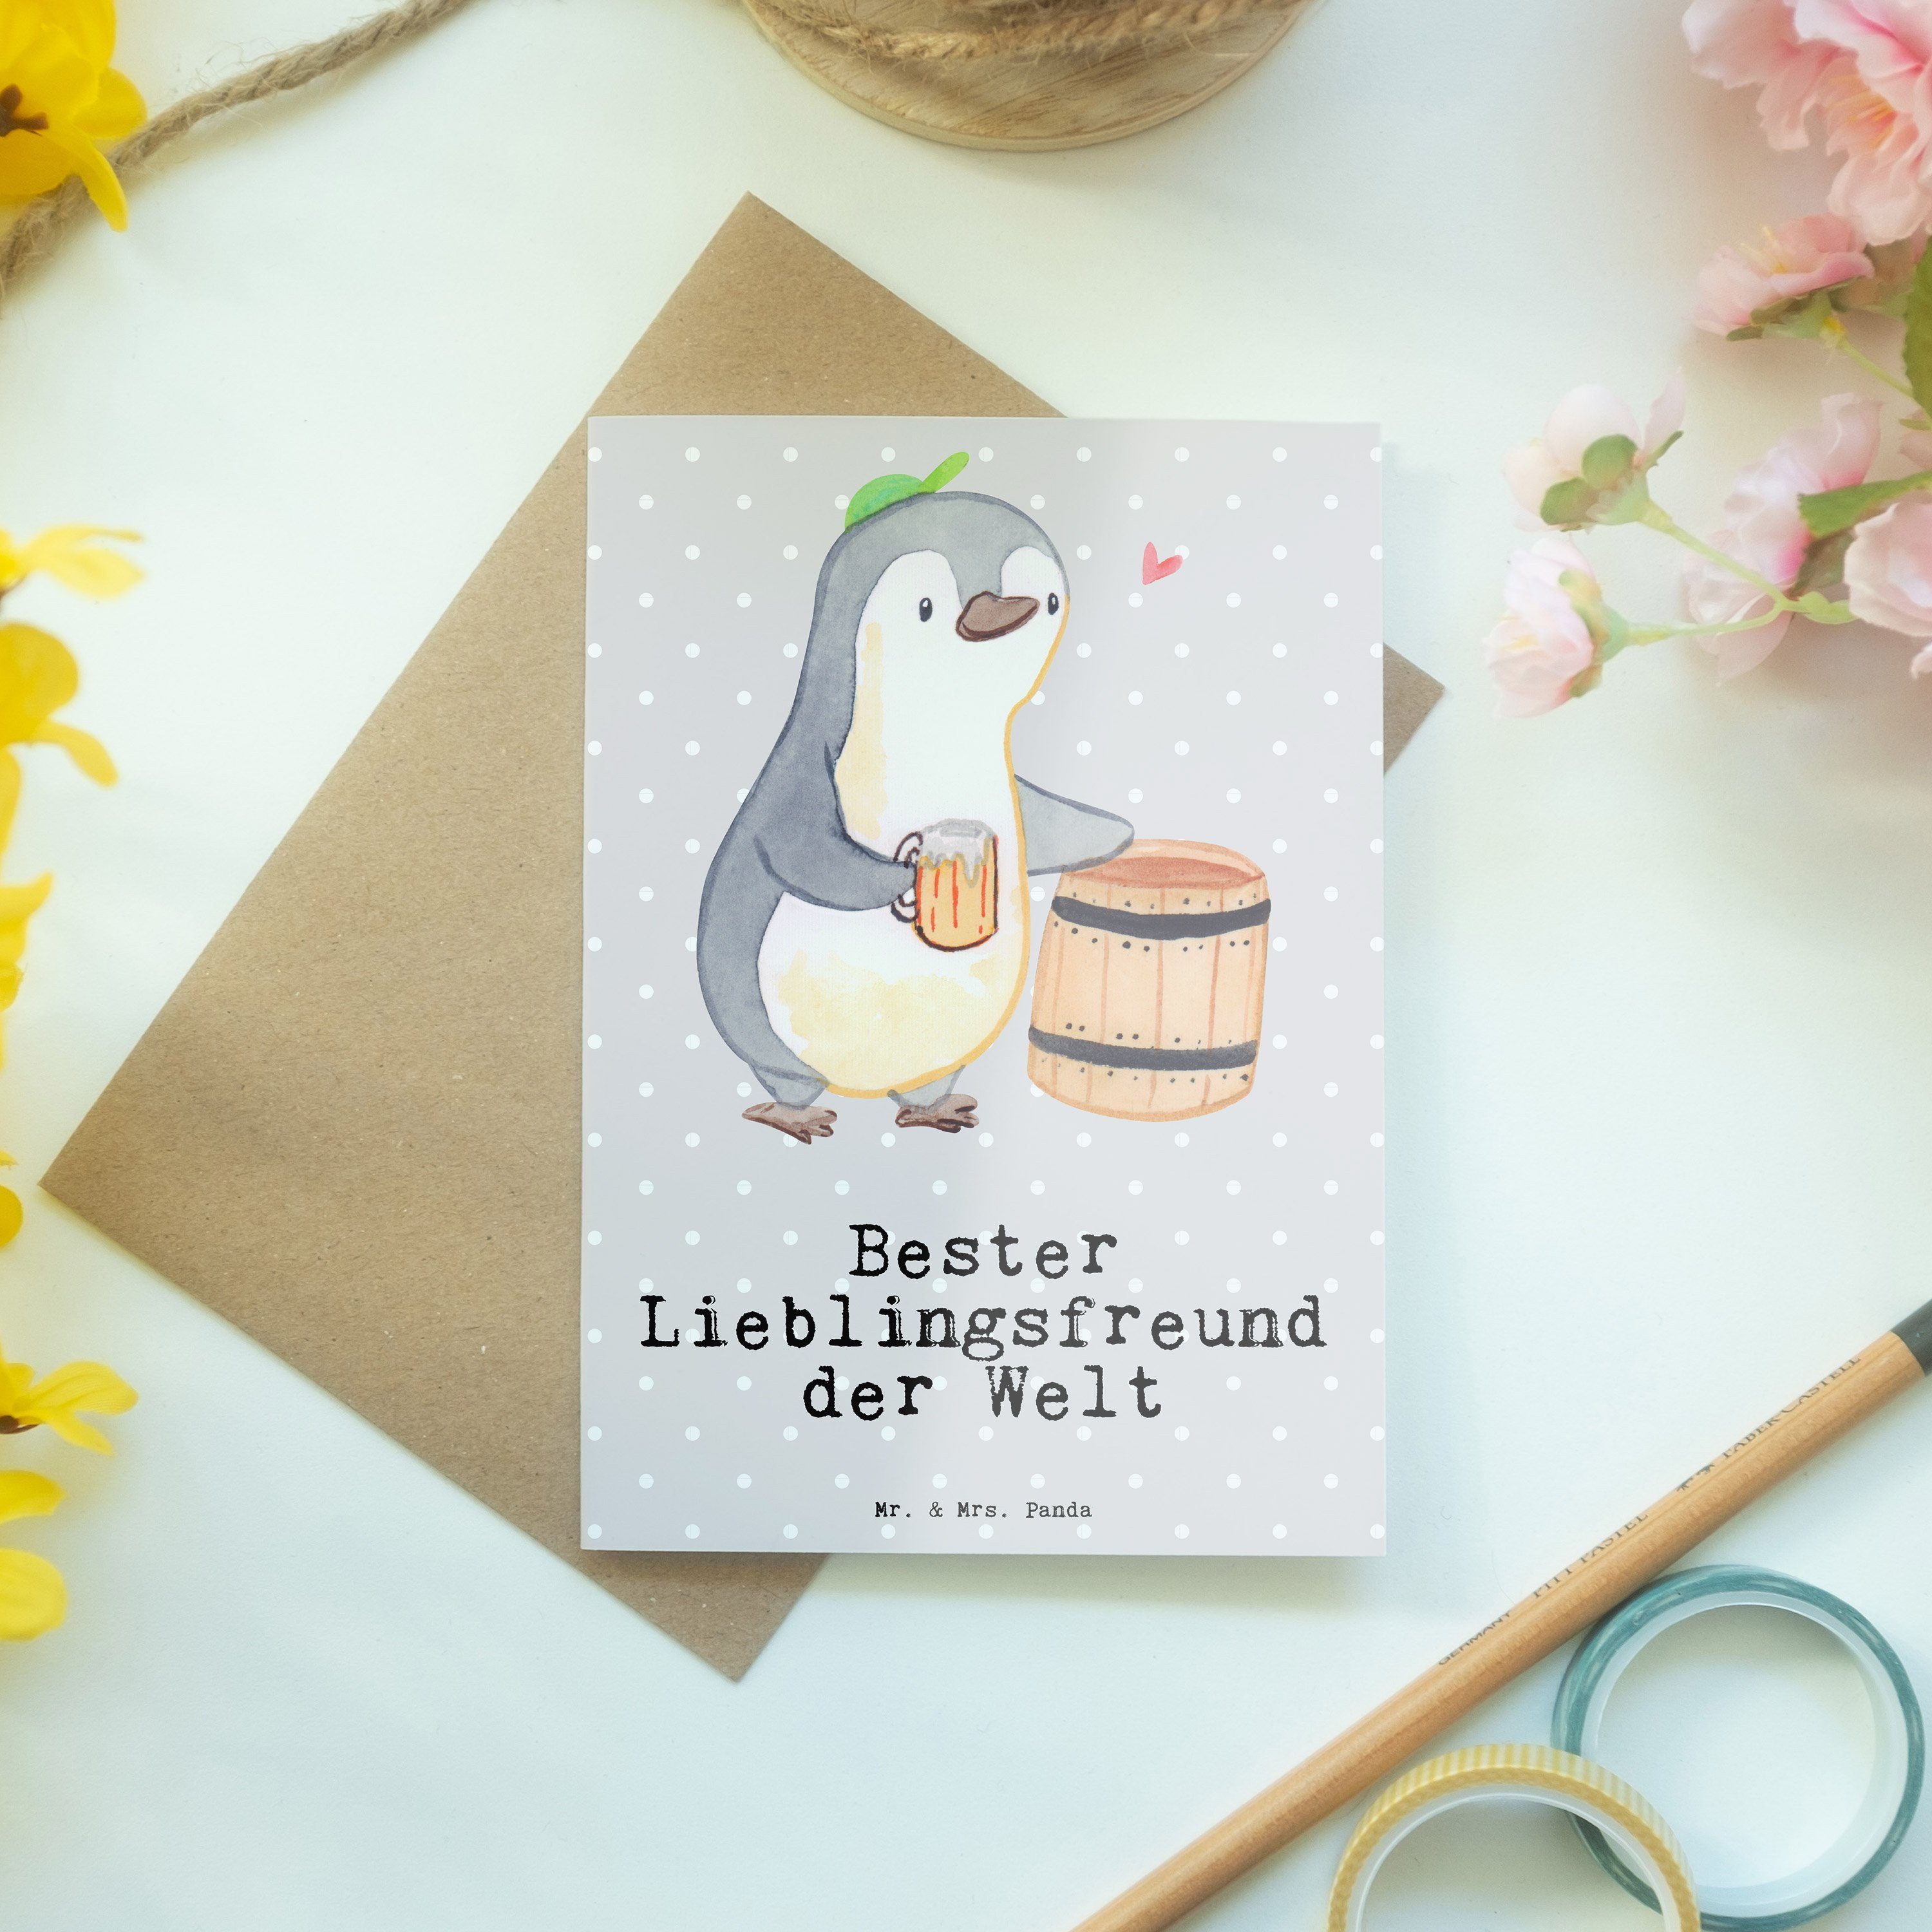 Mr. & Mrs. Panda Grußkarte Geschenk, Lieblingsfreund Welt Ge Grau Pastell - Bester der - Pinguin